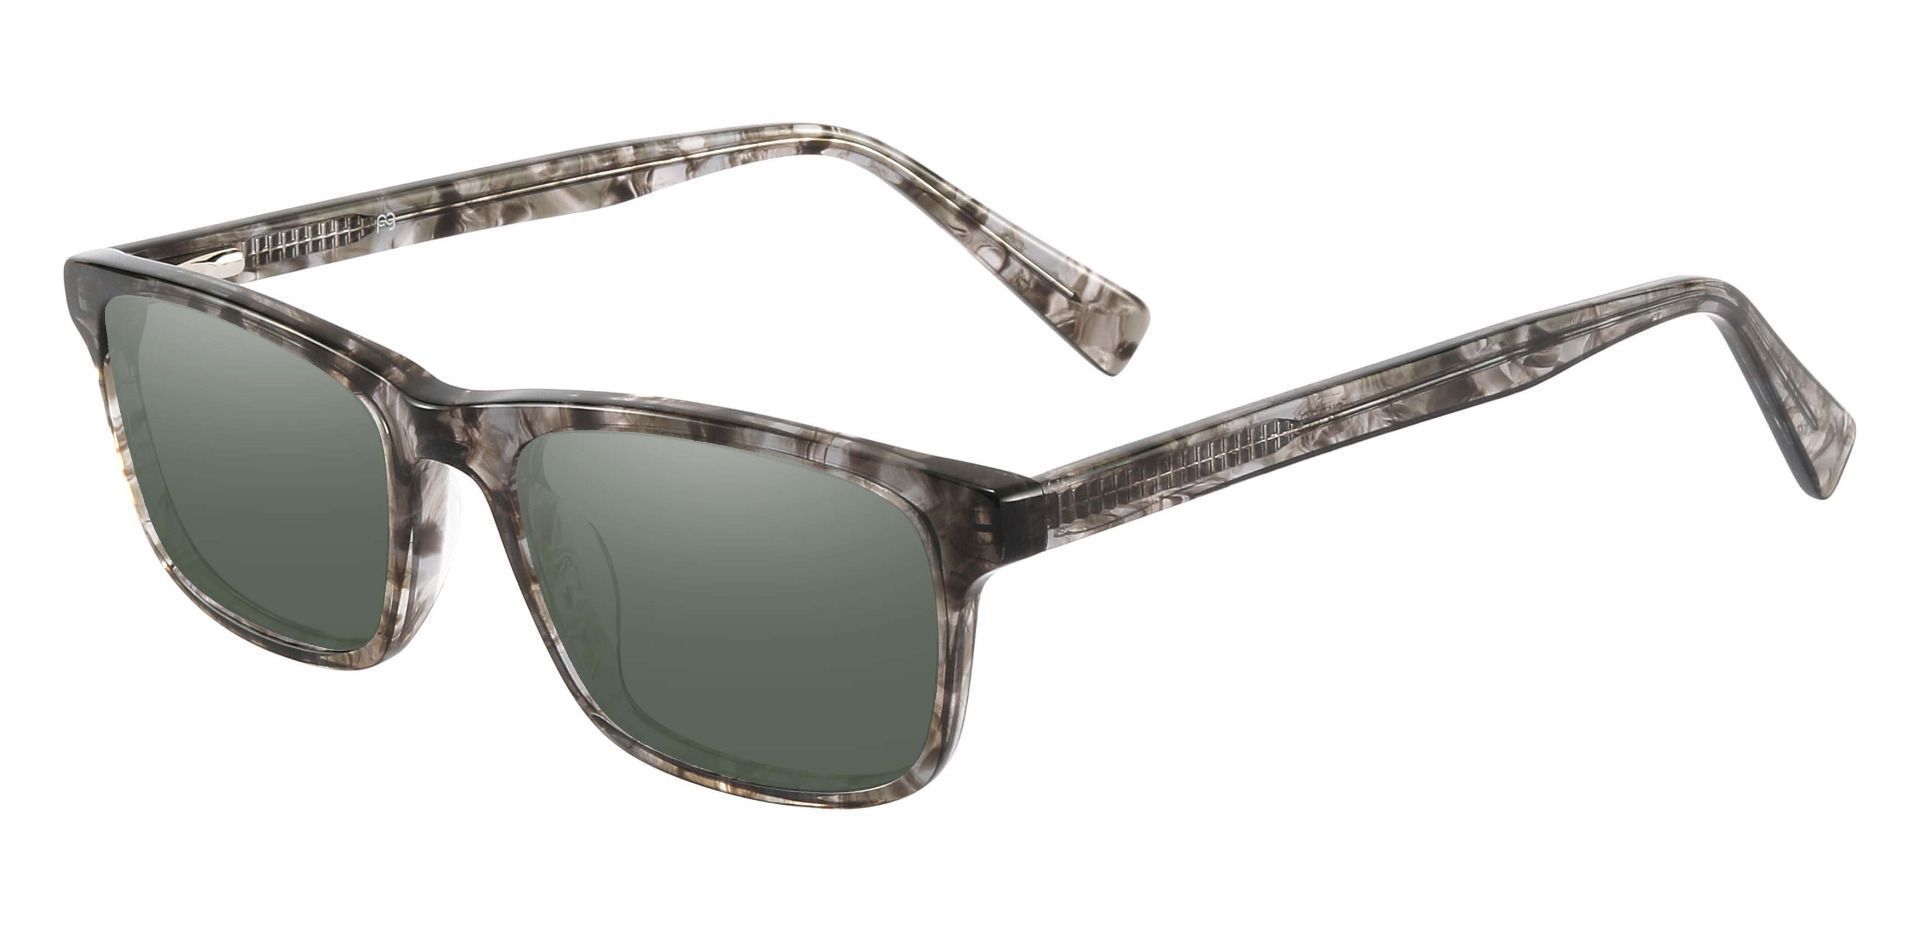 Munich Rectangle Prescription Sunglasses - Gray Frame With Green Lenses